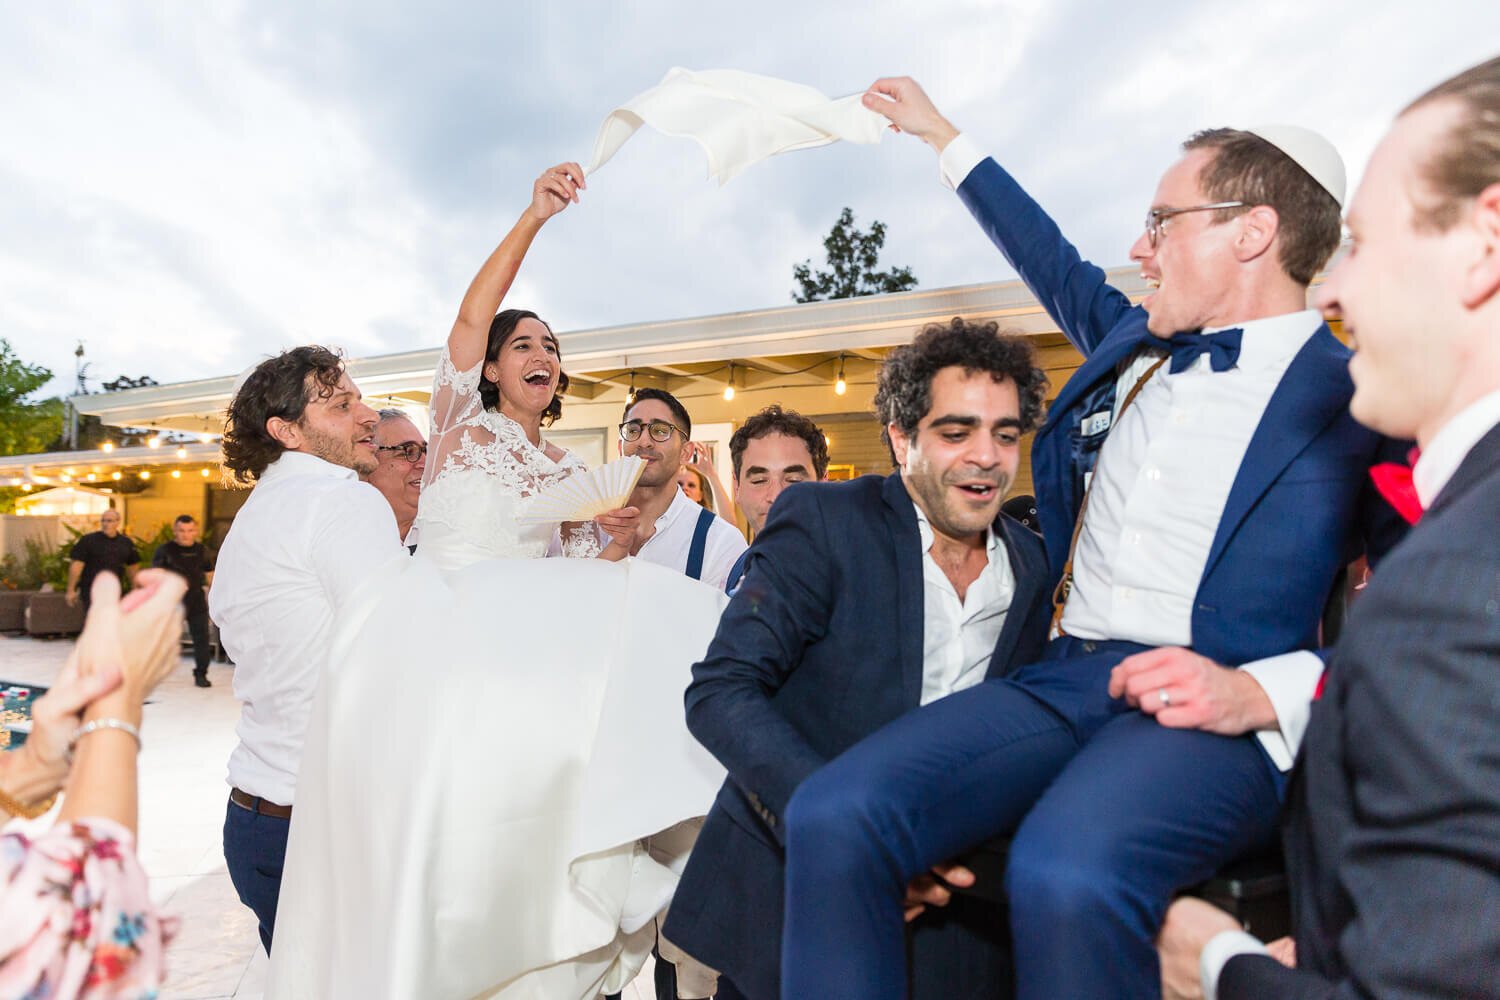  Jewish wedding photos 